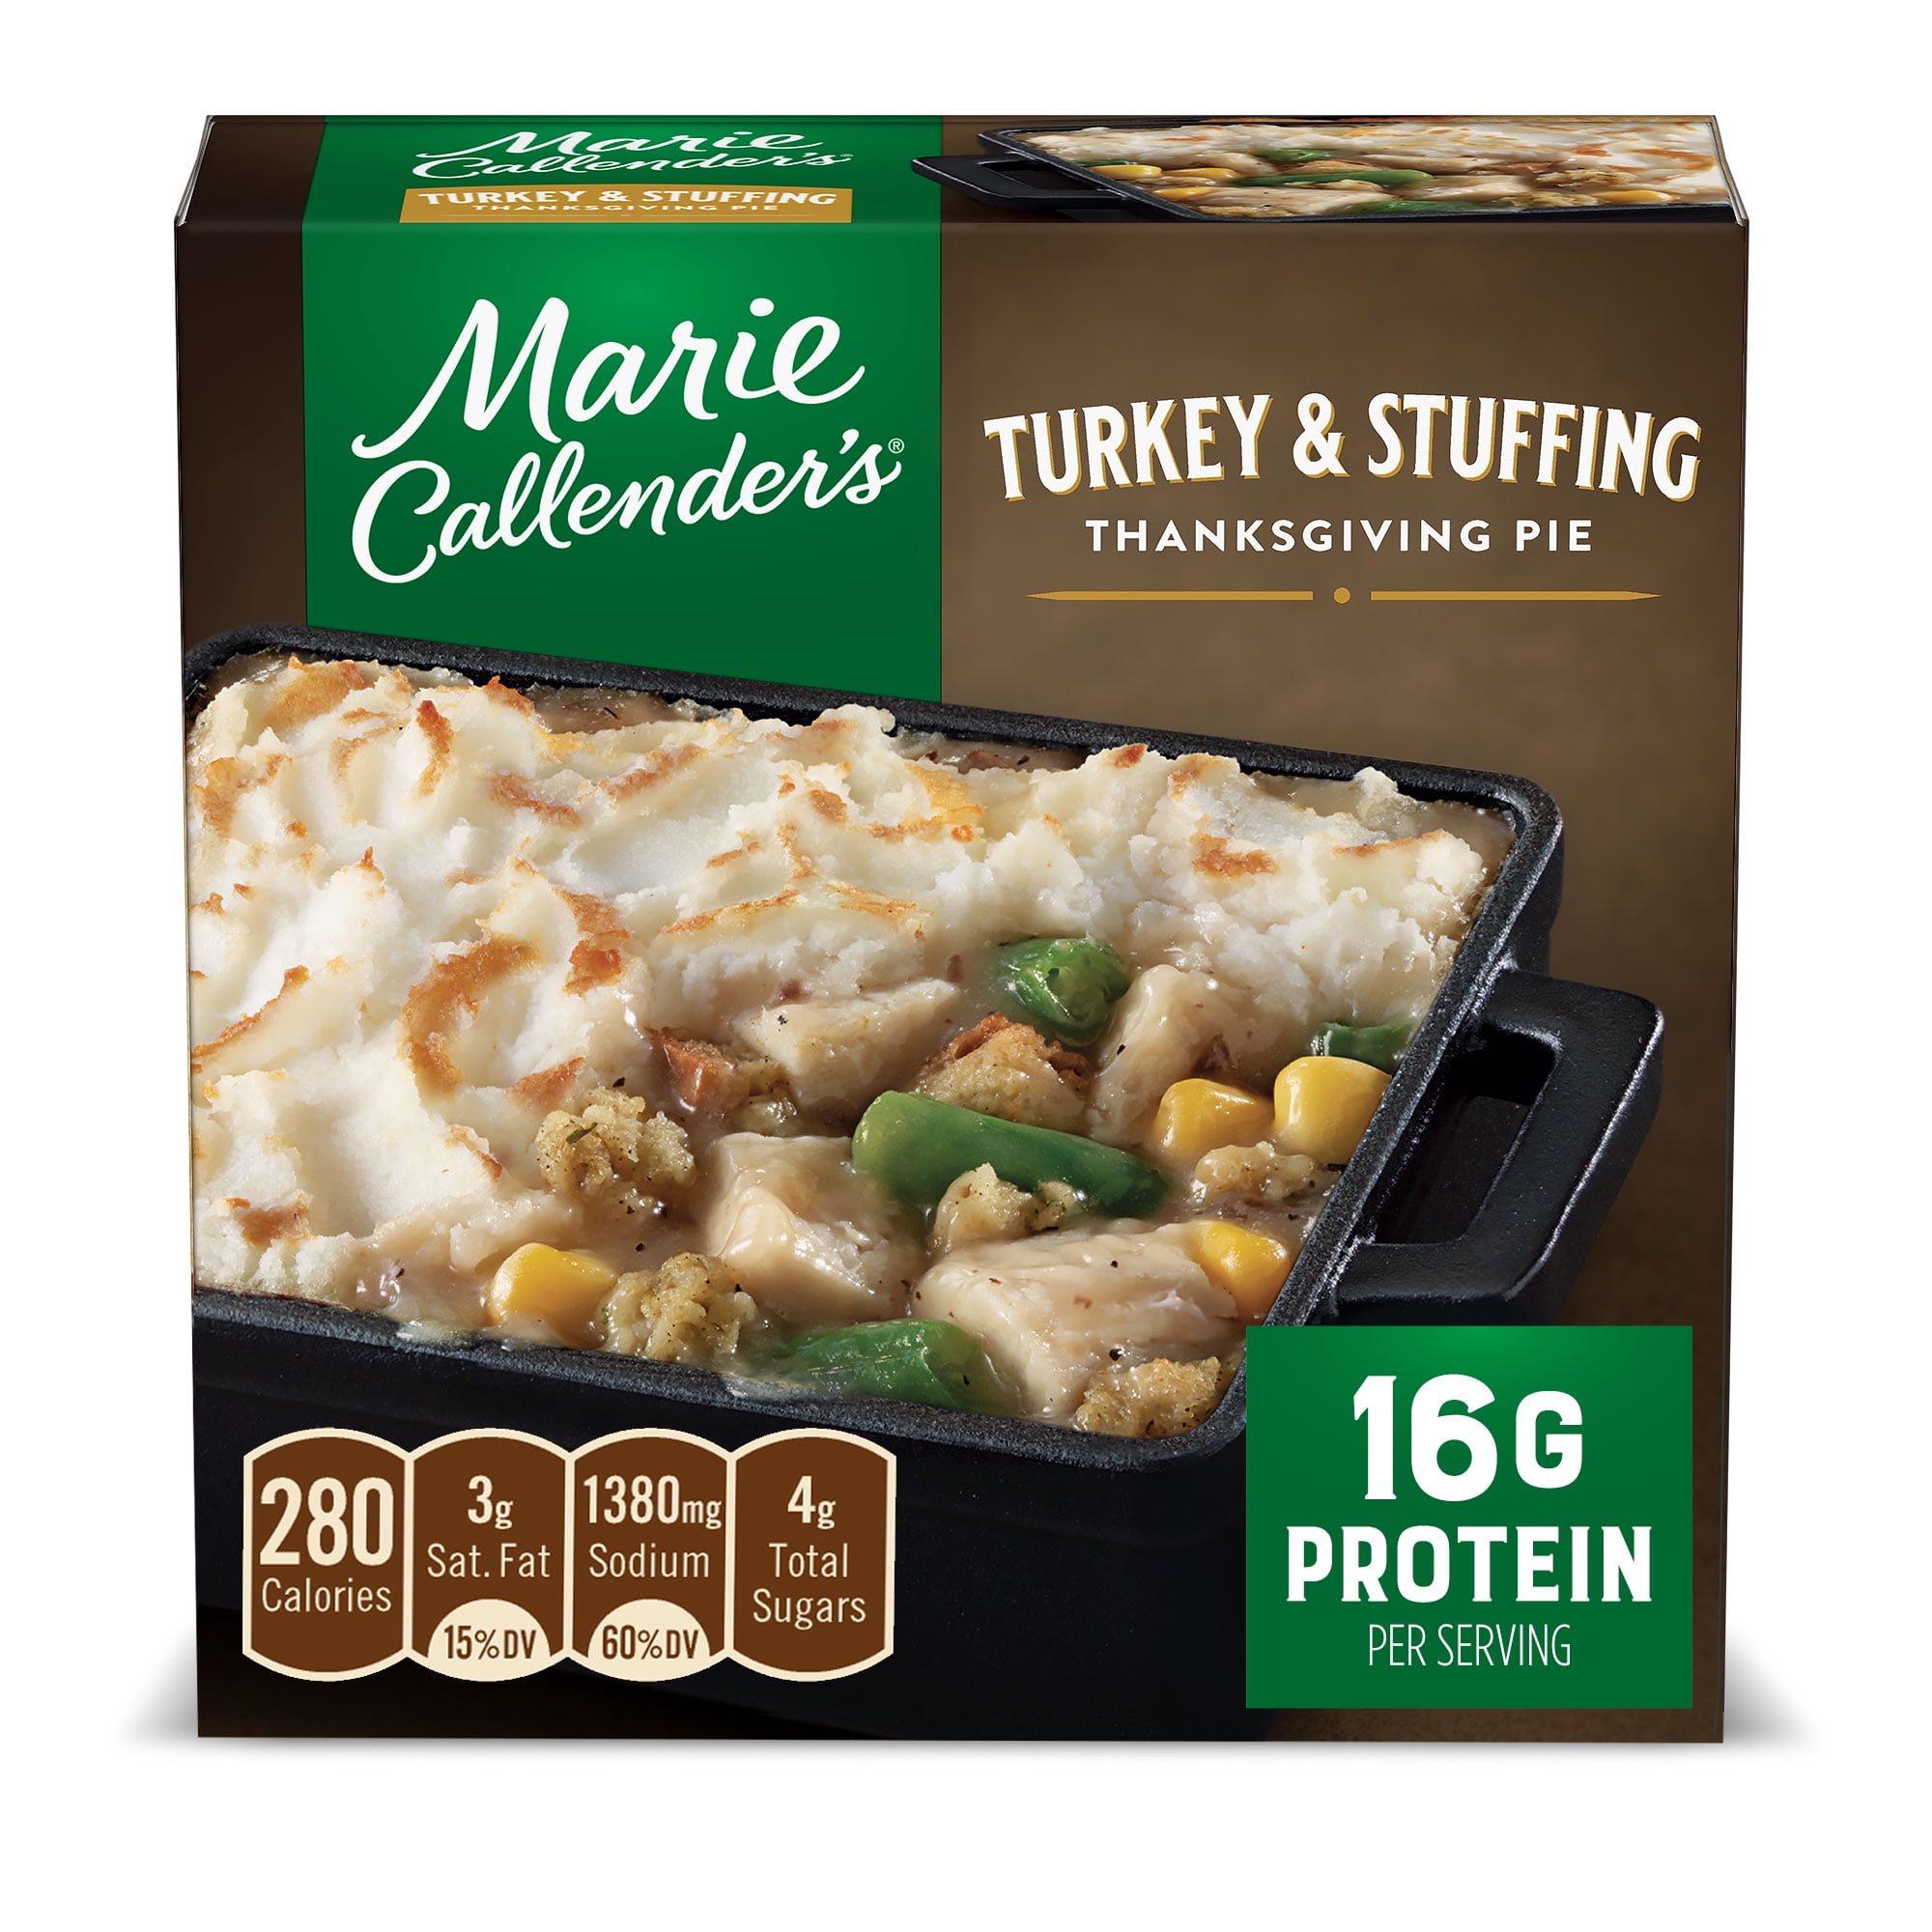 Marie Callender's Turkey and Stuffing Thanksgiving Pie ...